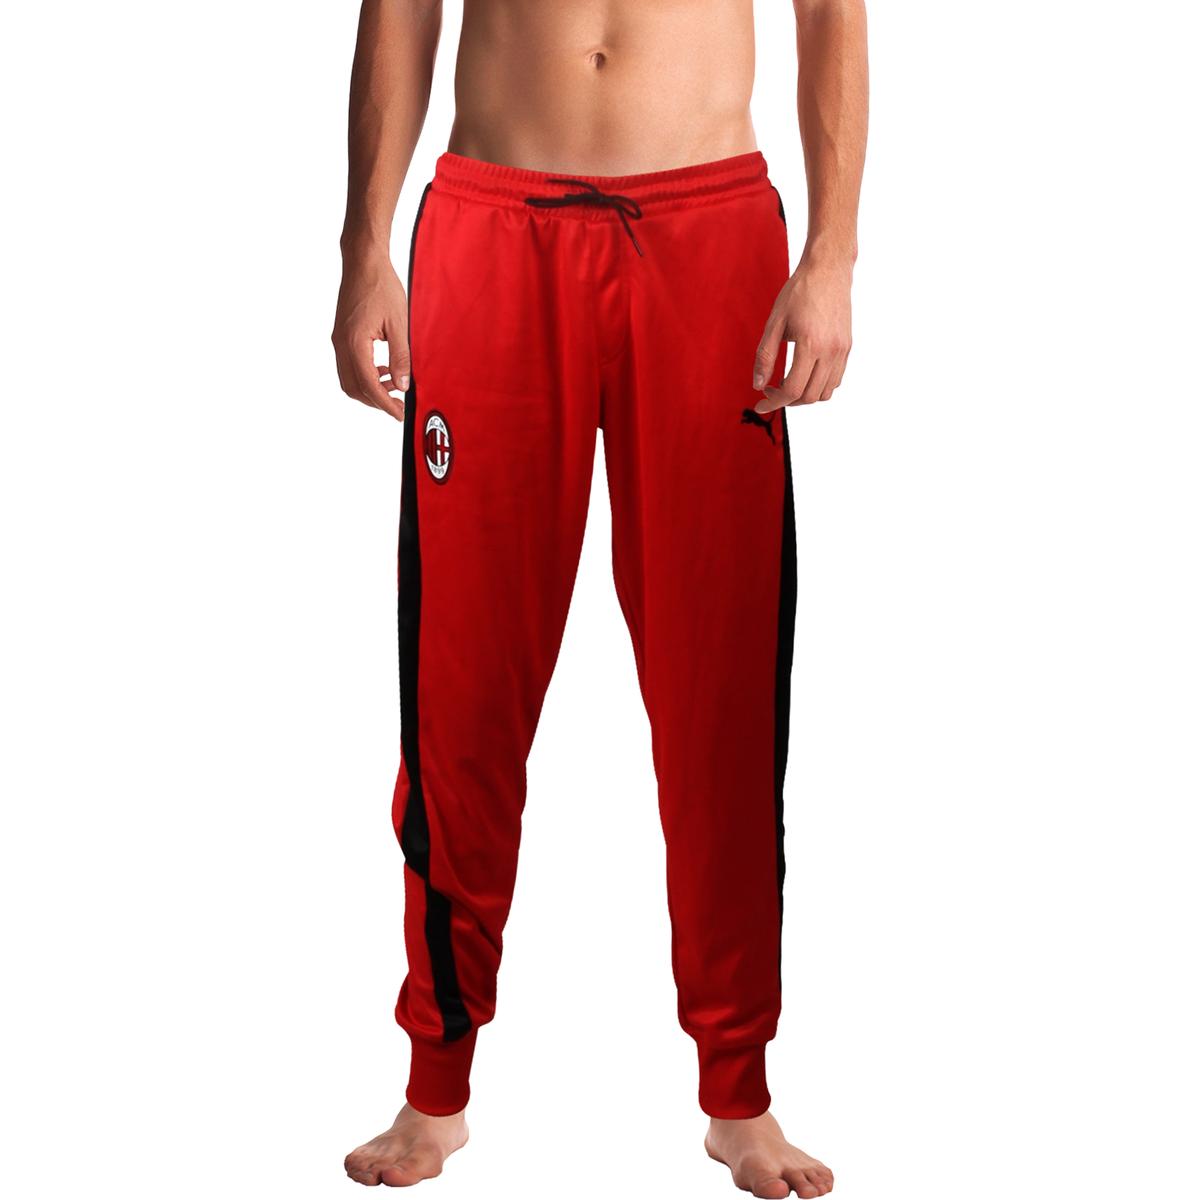 Puma Mens Red Tech Fitness Running Pants Athletic L BHFO 2168 | eBay